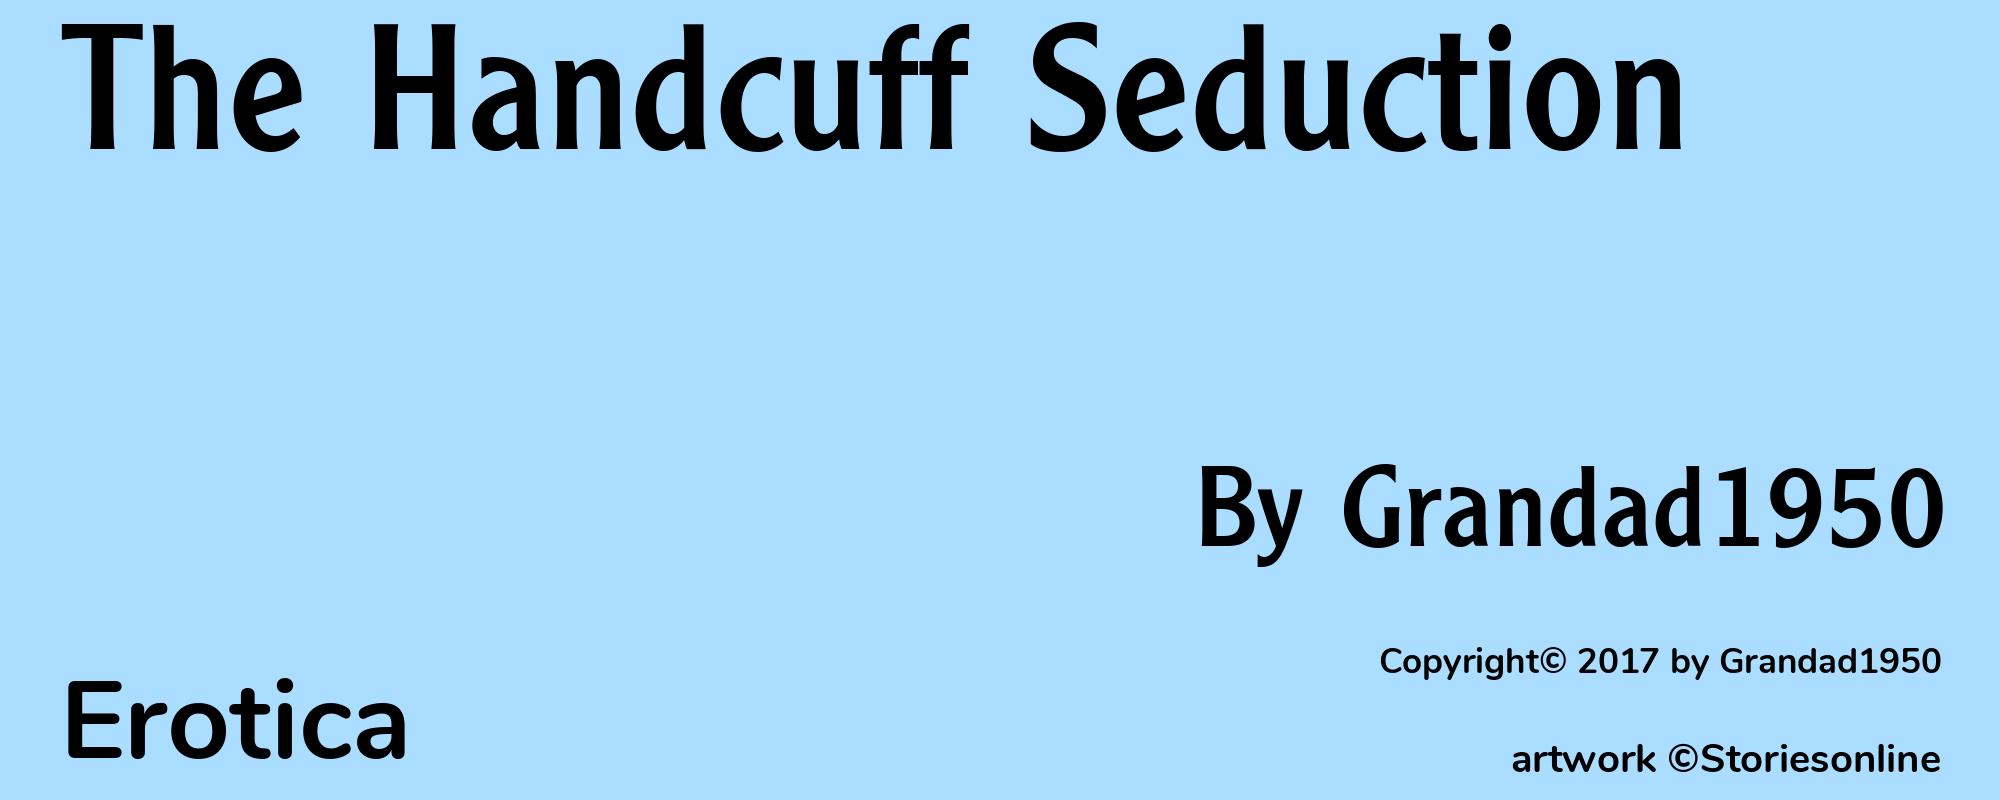 The Handcuff Seduction - Cover